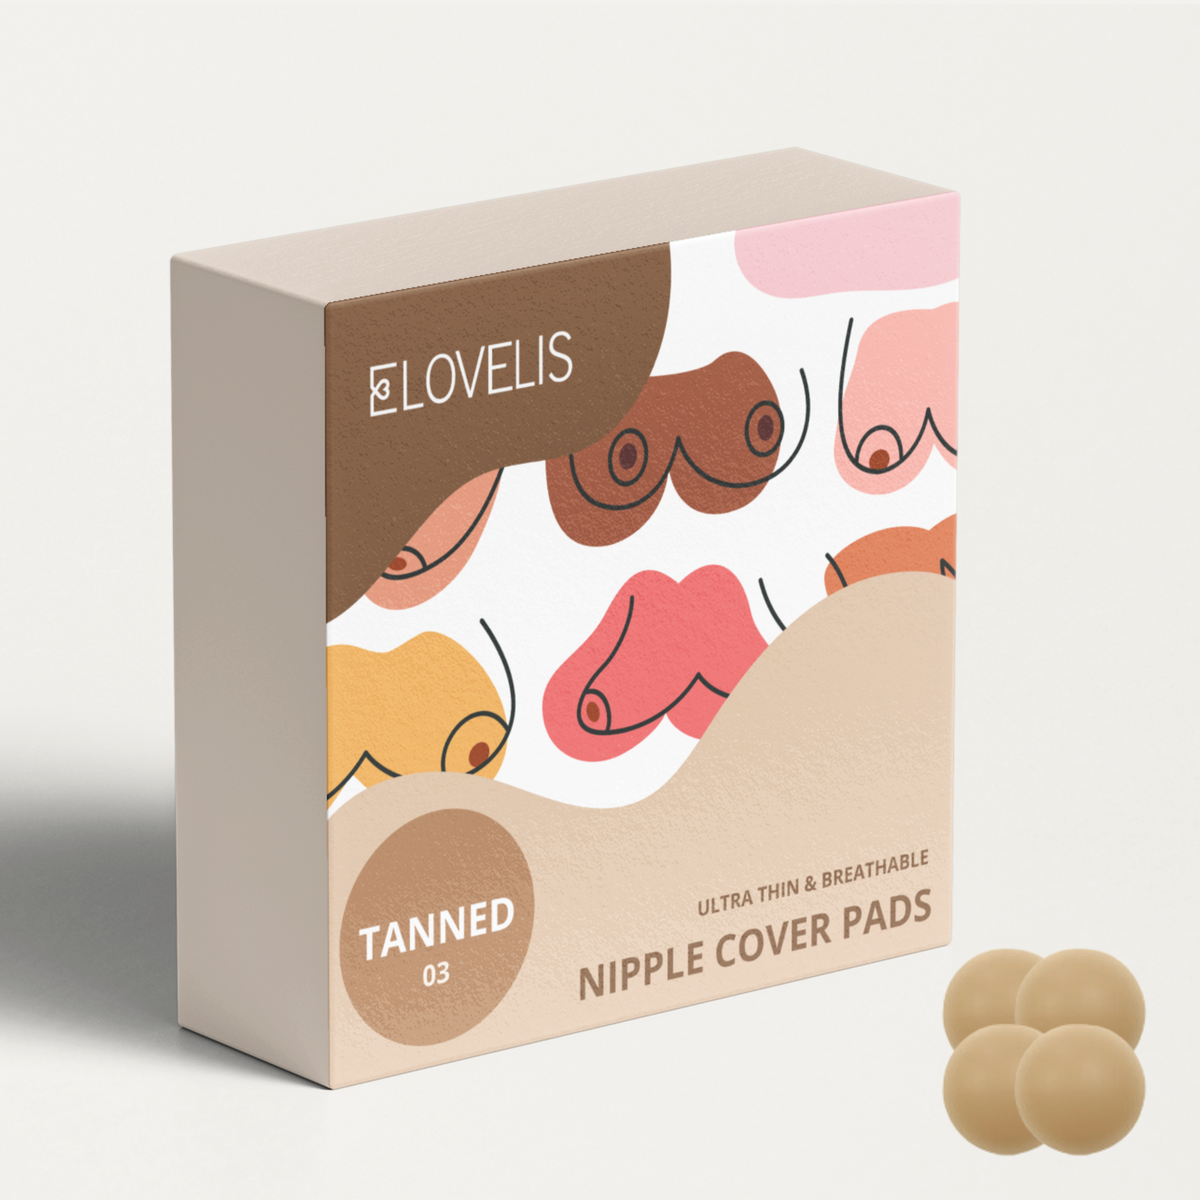 2er Pack Nipple Cover Pads Inkl. Travel Bag